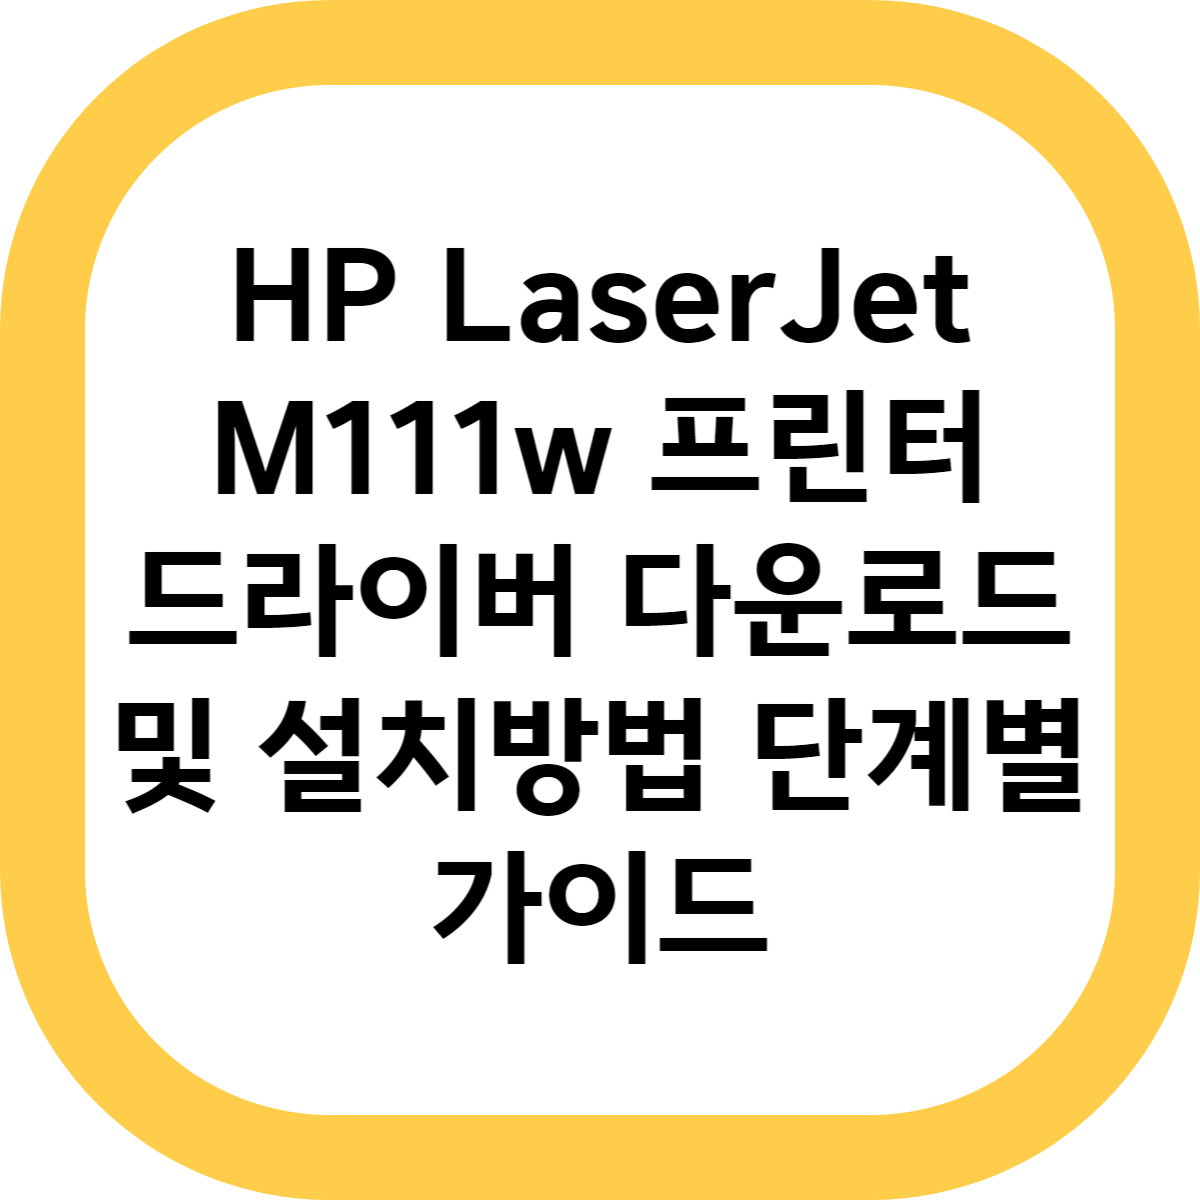 HP LaserJet M111w 프린터 드라이버 다운로드 및 설치방법 단계별 가이드